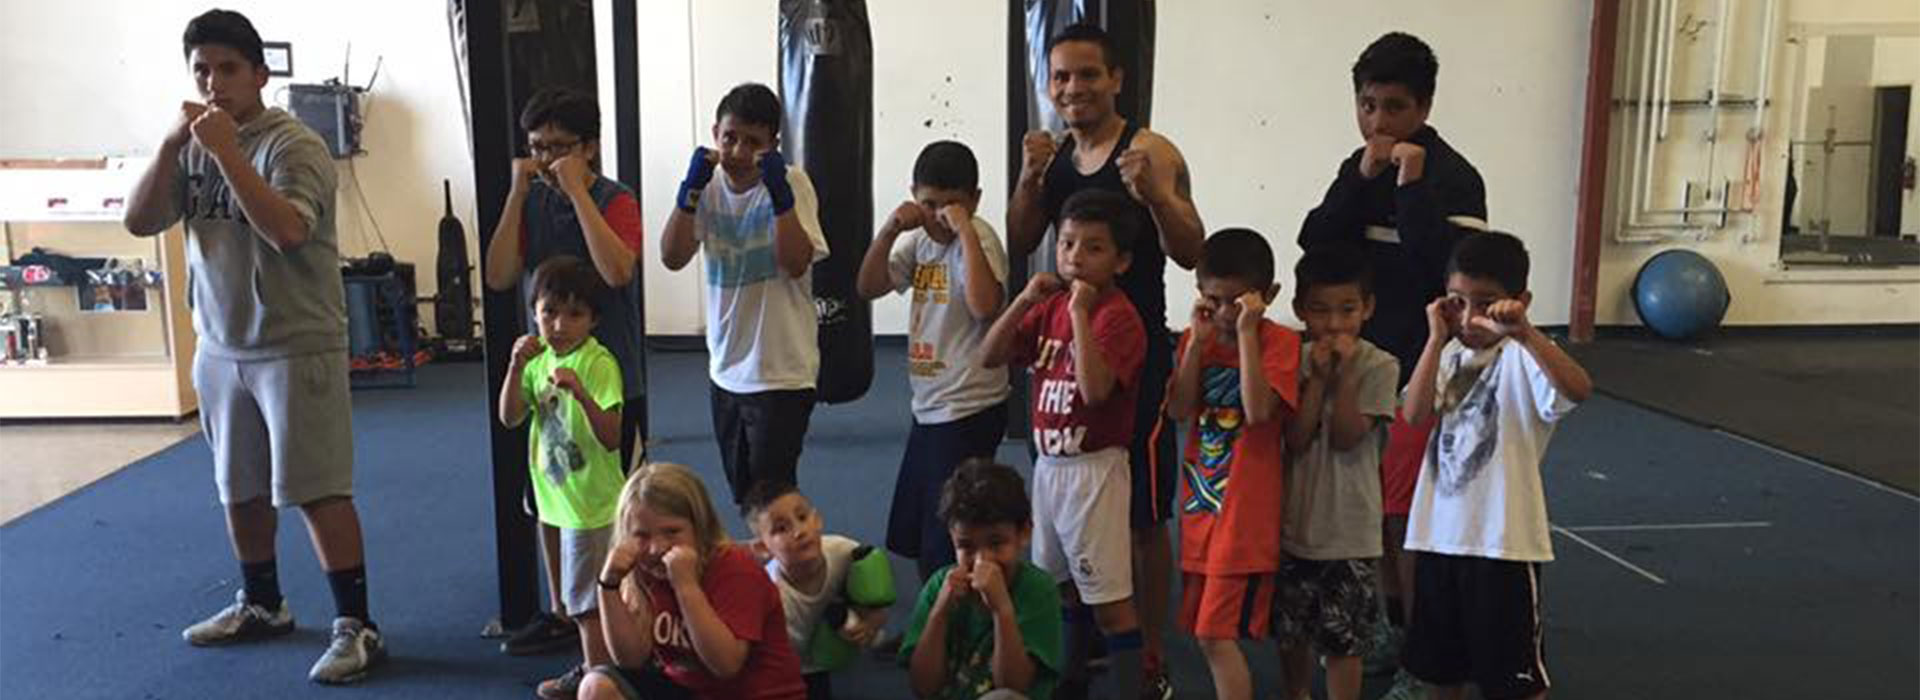 Kids Boxing In Mountain Video, California